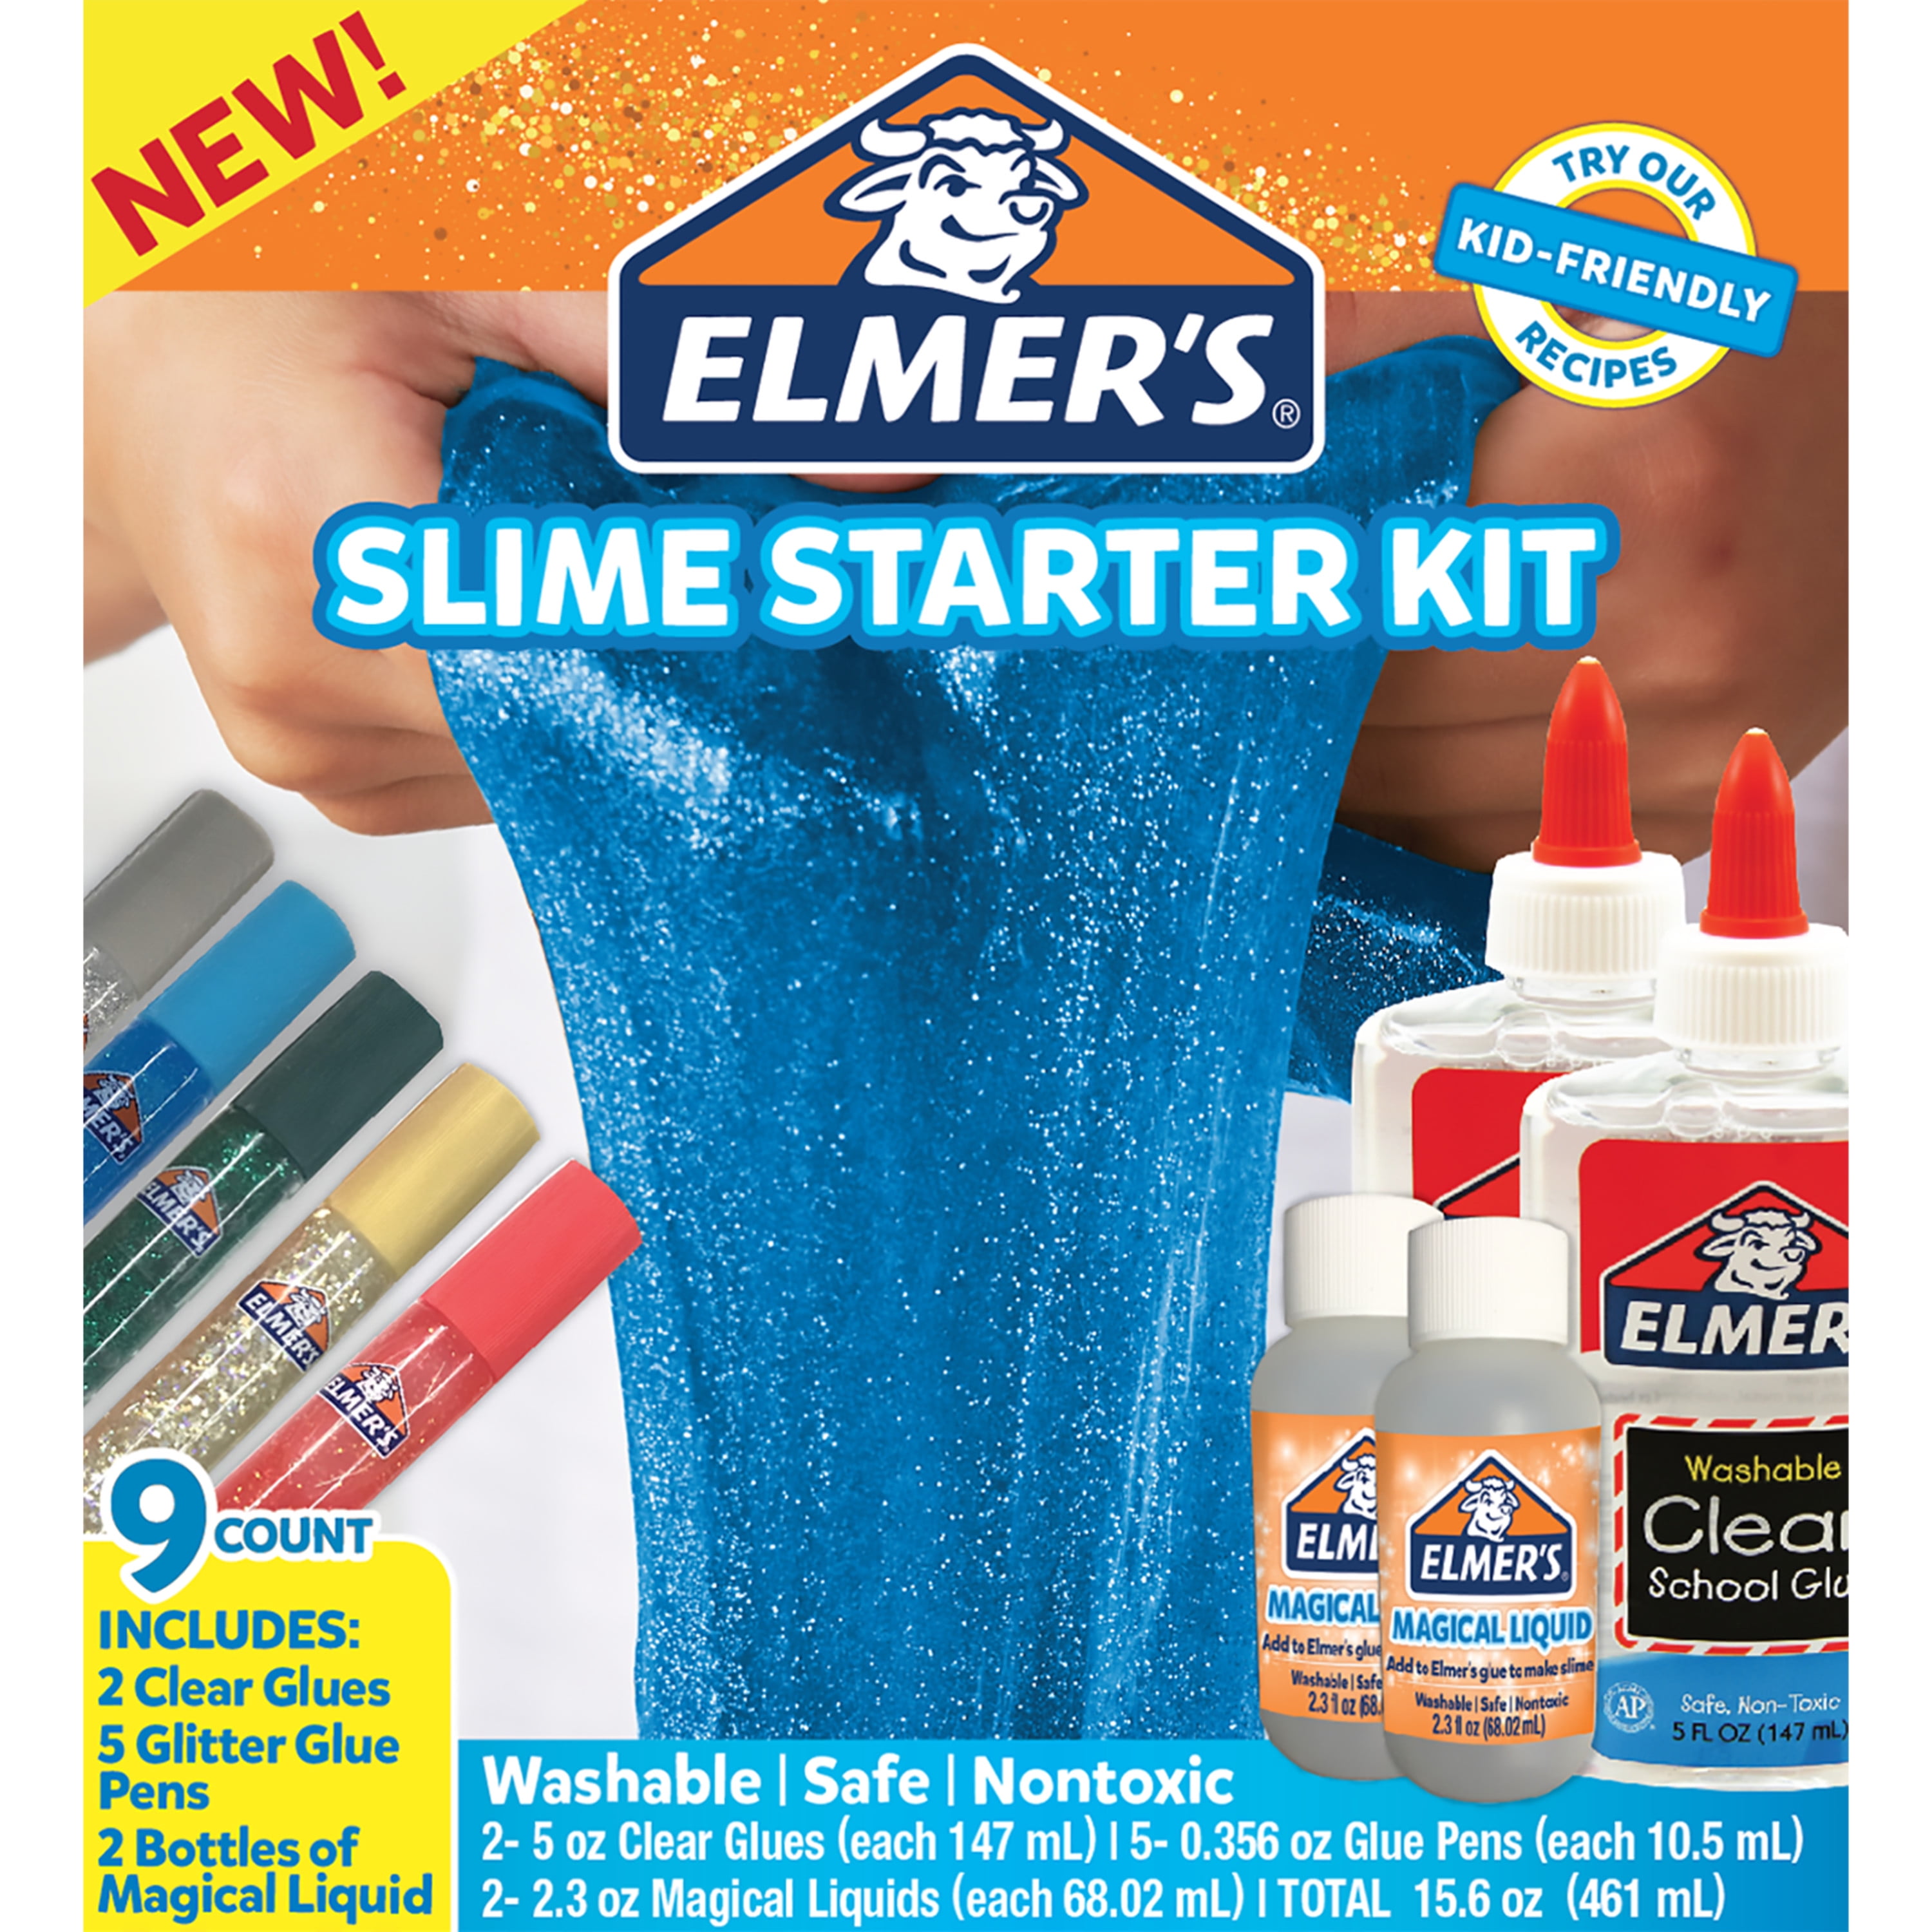 Elmer's Glitter Slime Kit – The English Bookshop